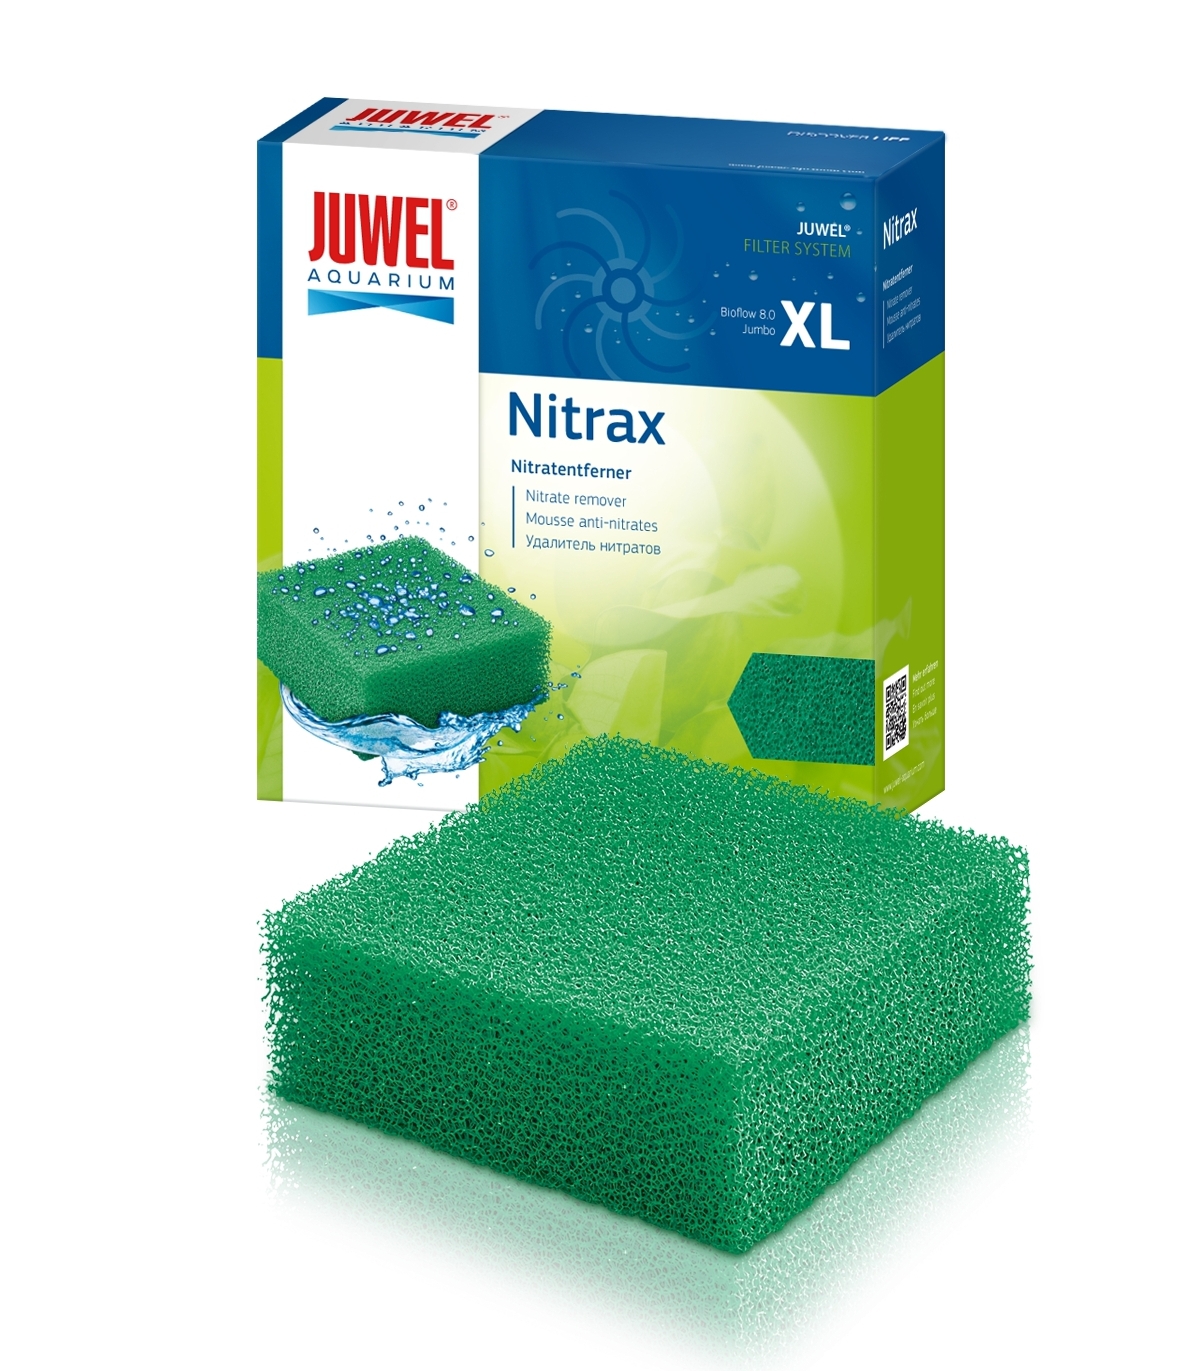 Juwel Filtrační náplň - Nitrax Entferner JUMBO/Bioflow 8.0/XL